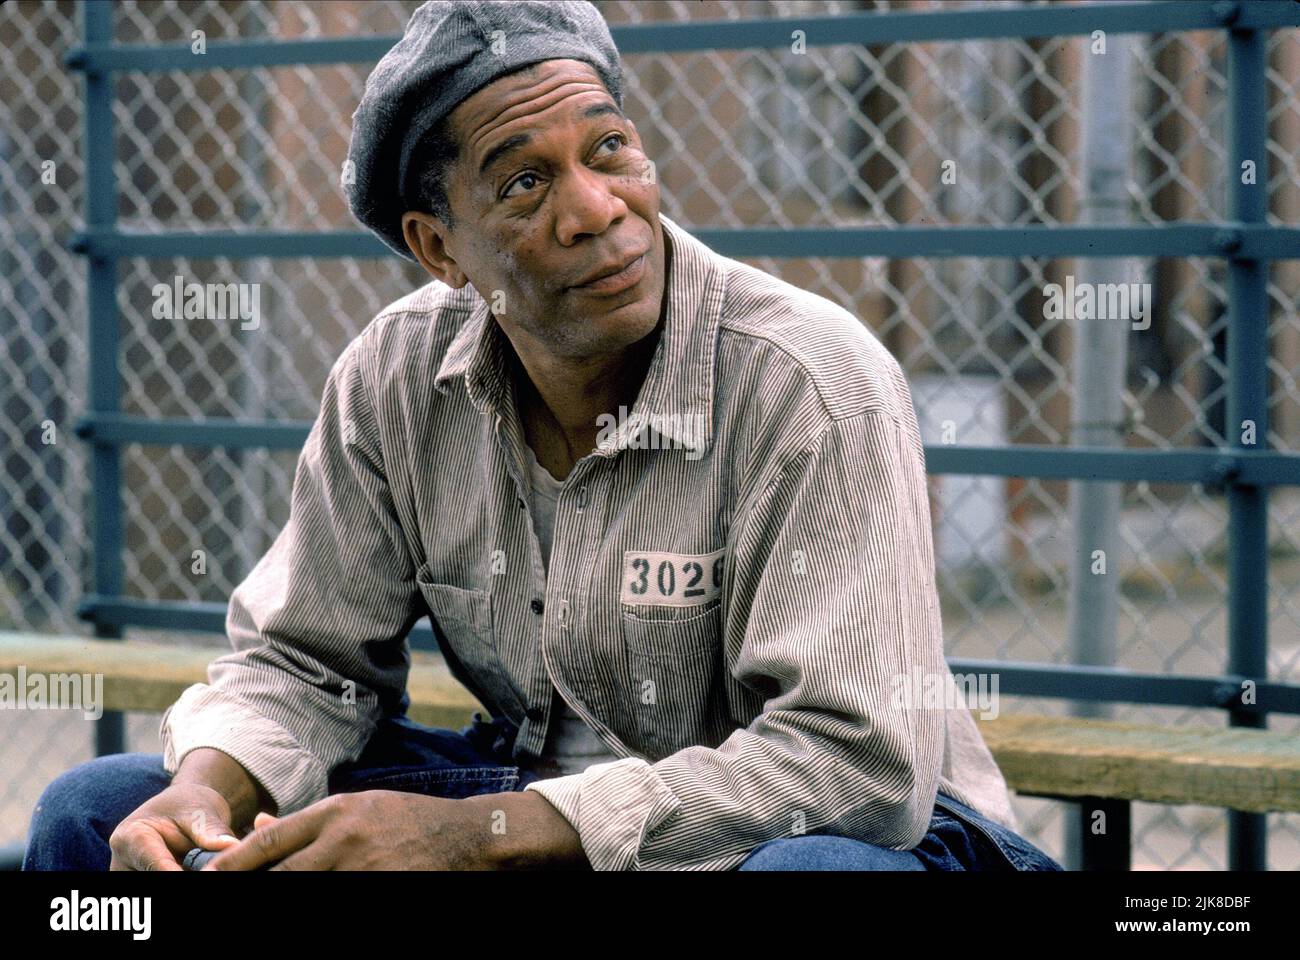 Morgan Freeman Film: The Shawshank Redemption (USA 1994) Characters: Ellis Boyd 'Red' Redding / Literaturverfilmung Nach Der Novelle "Frühlingserwachen: Pin-Up" (Based On Novella "Rita Hayworth And Shawshank Redemption" By Stephen King)